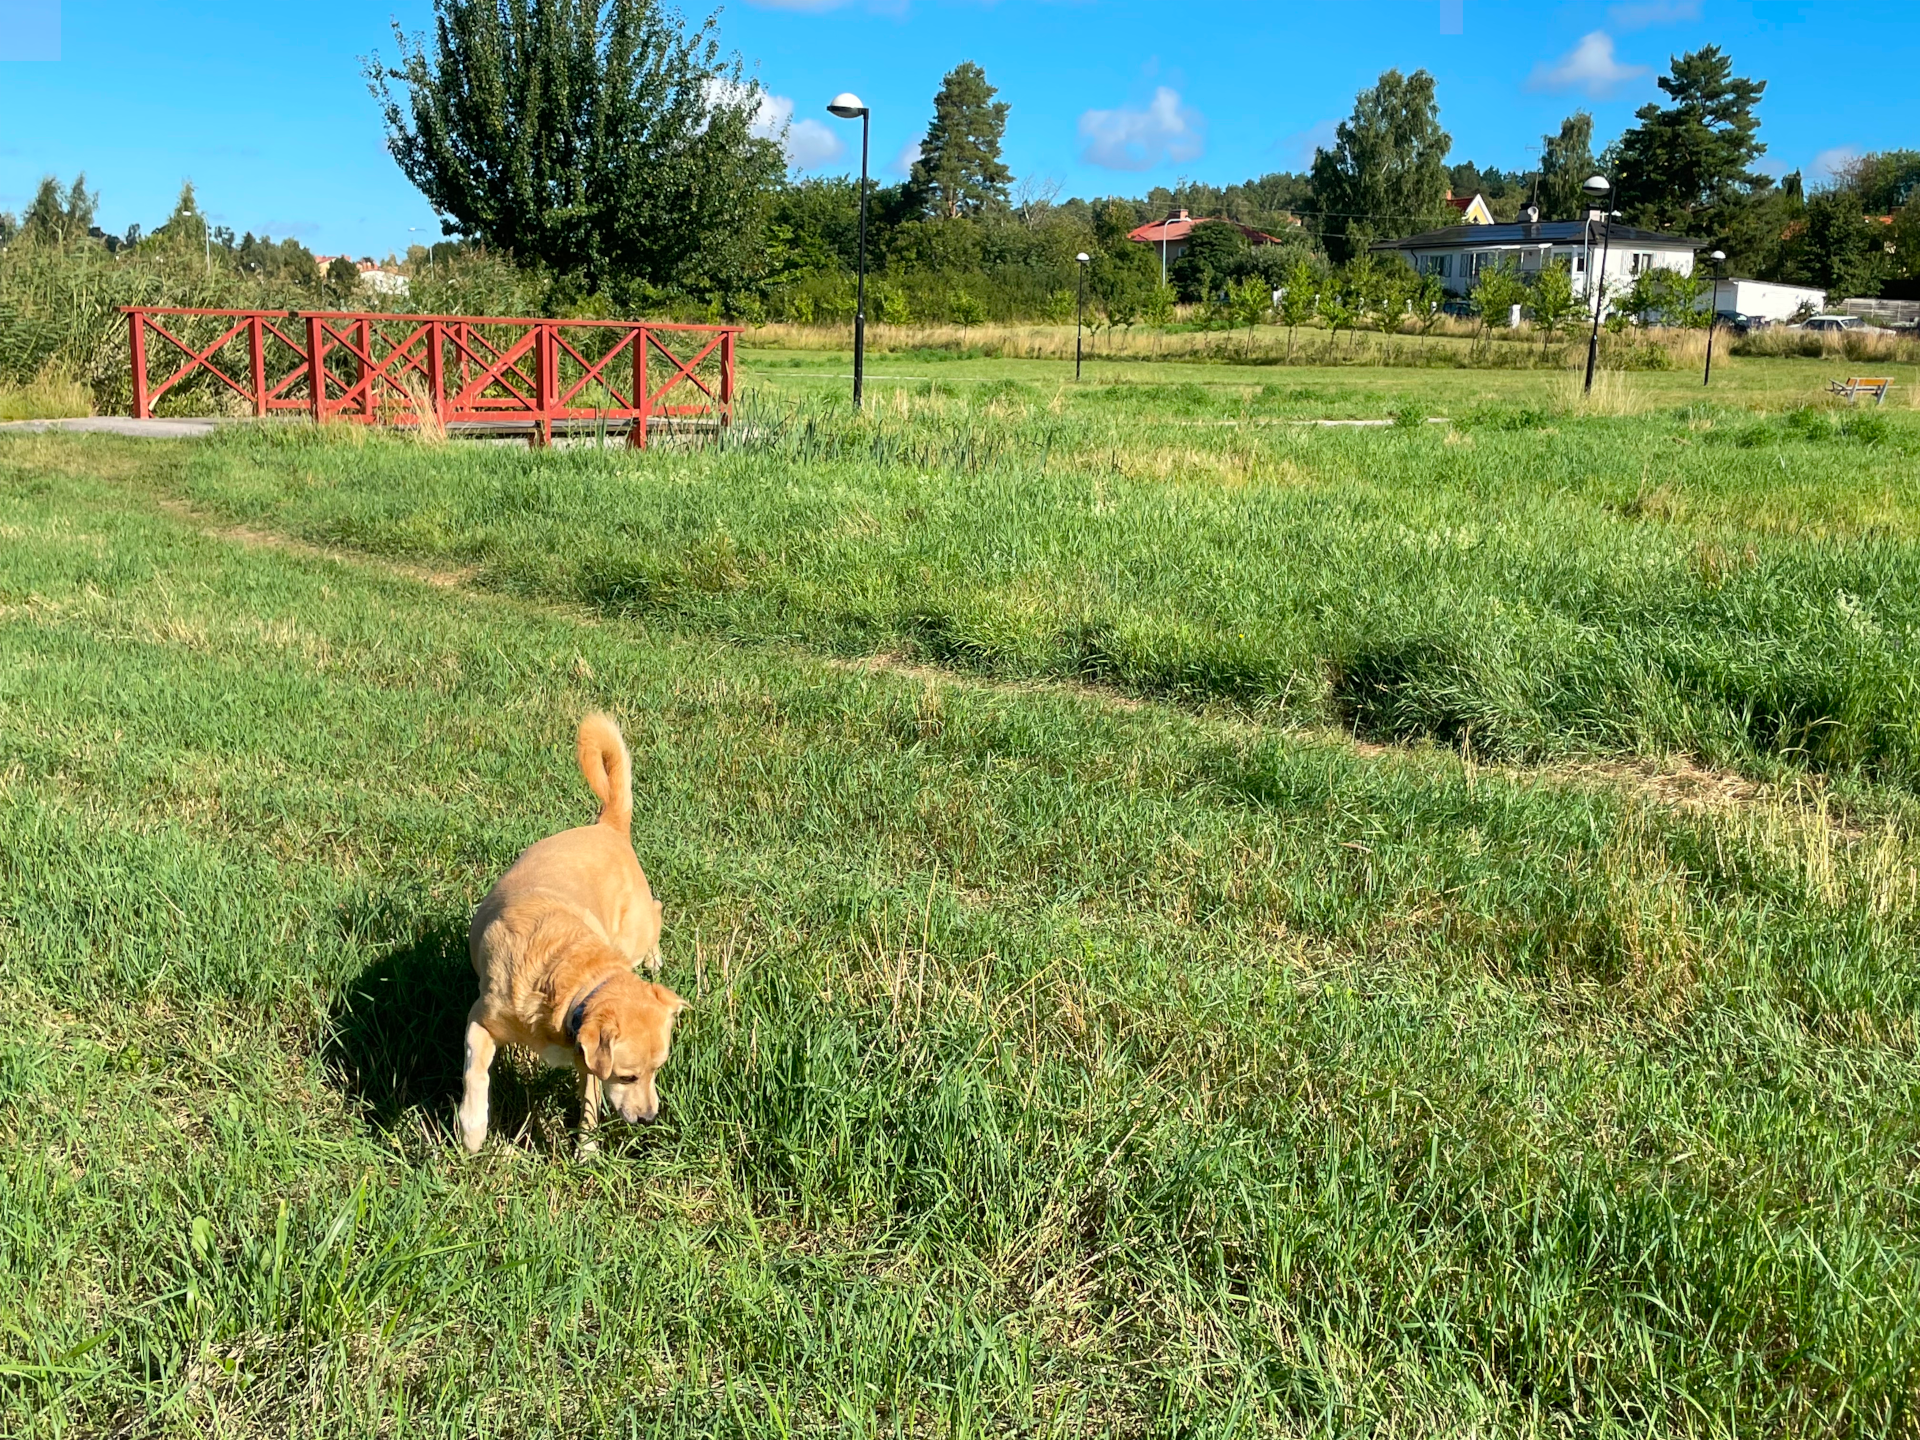 A dog walks in a grassy field